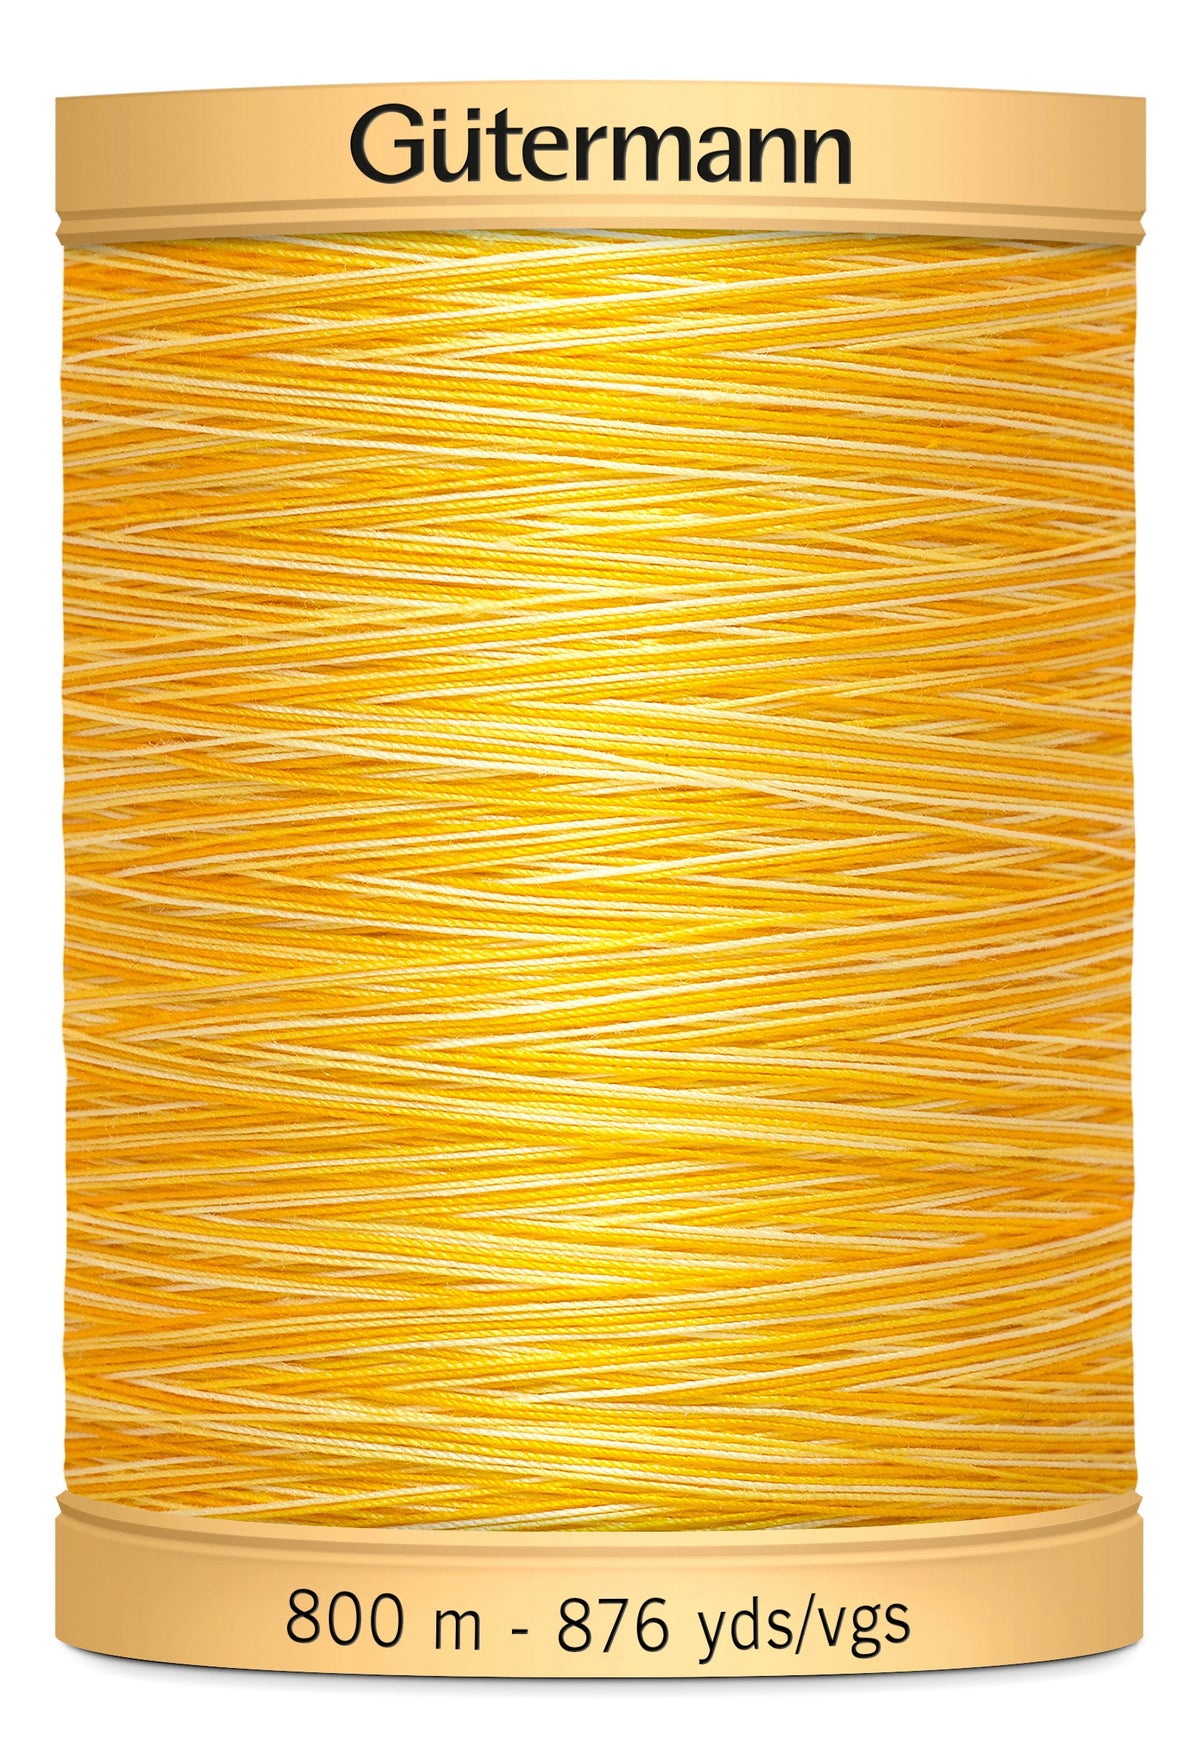 Gutermann Machine Quilting Thread 9918 Sunset Yellow 800m Spool